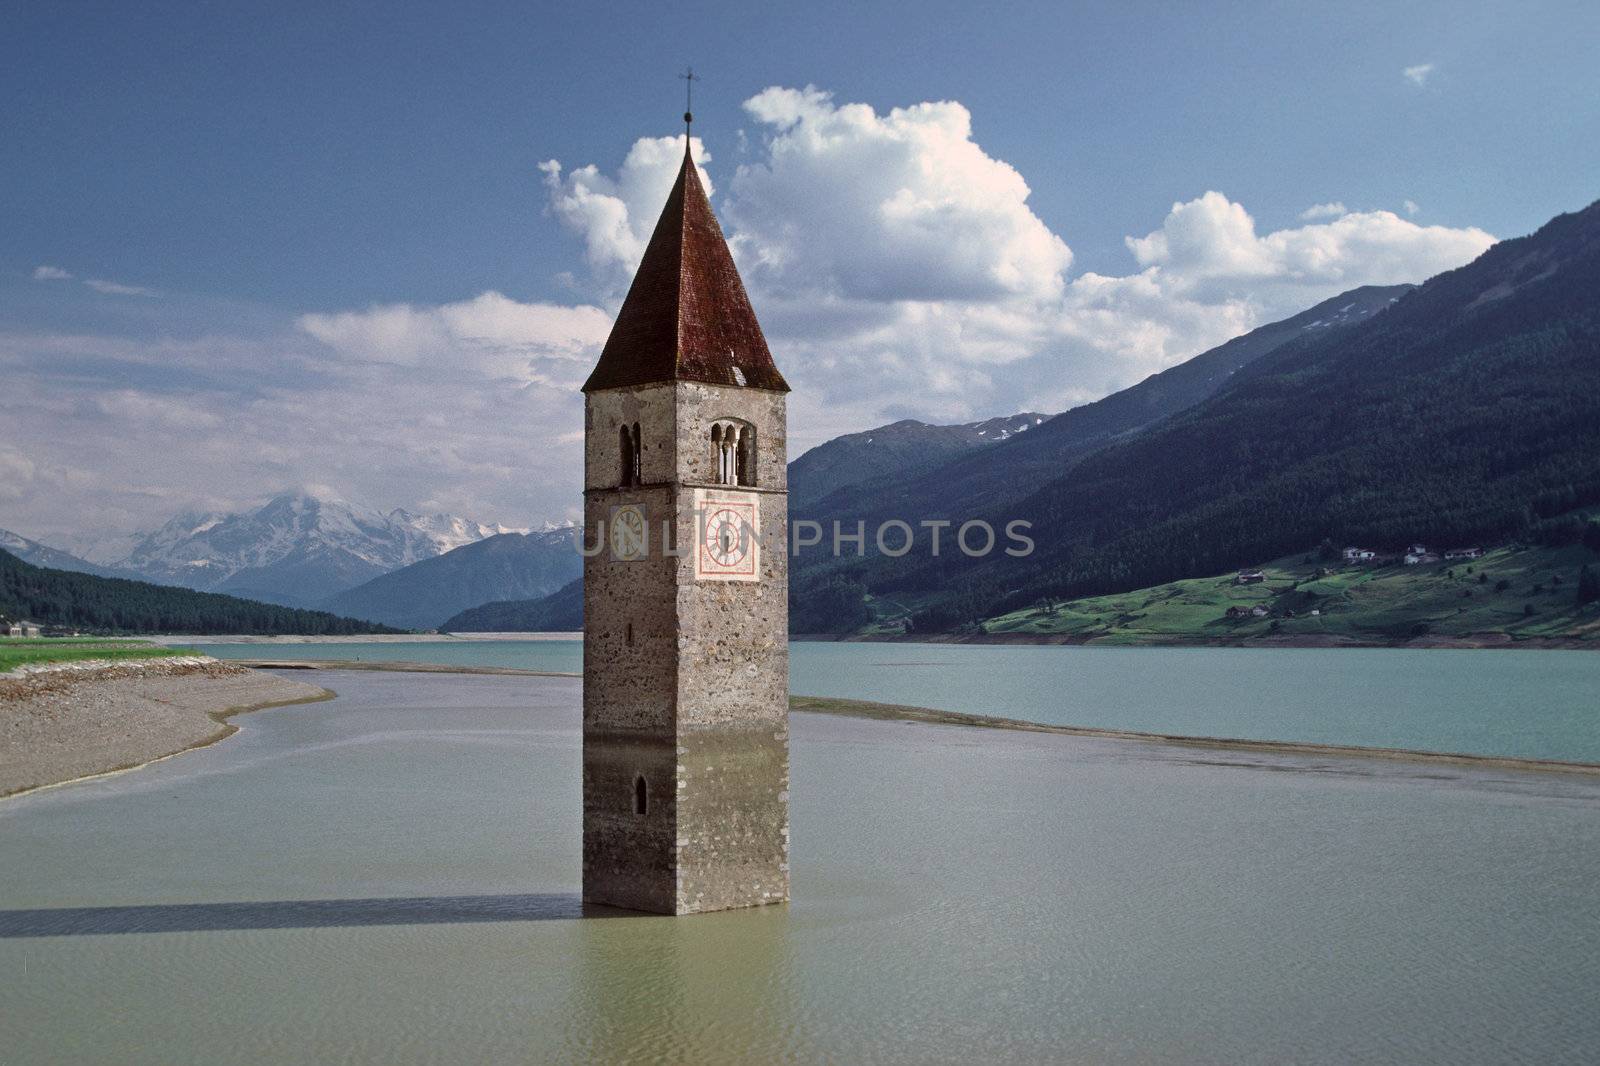 Church tower near Graun, in the Reschensee in South Tyrol, Italy. Graun, Kirchturm, Reschensee